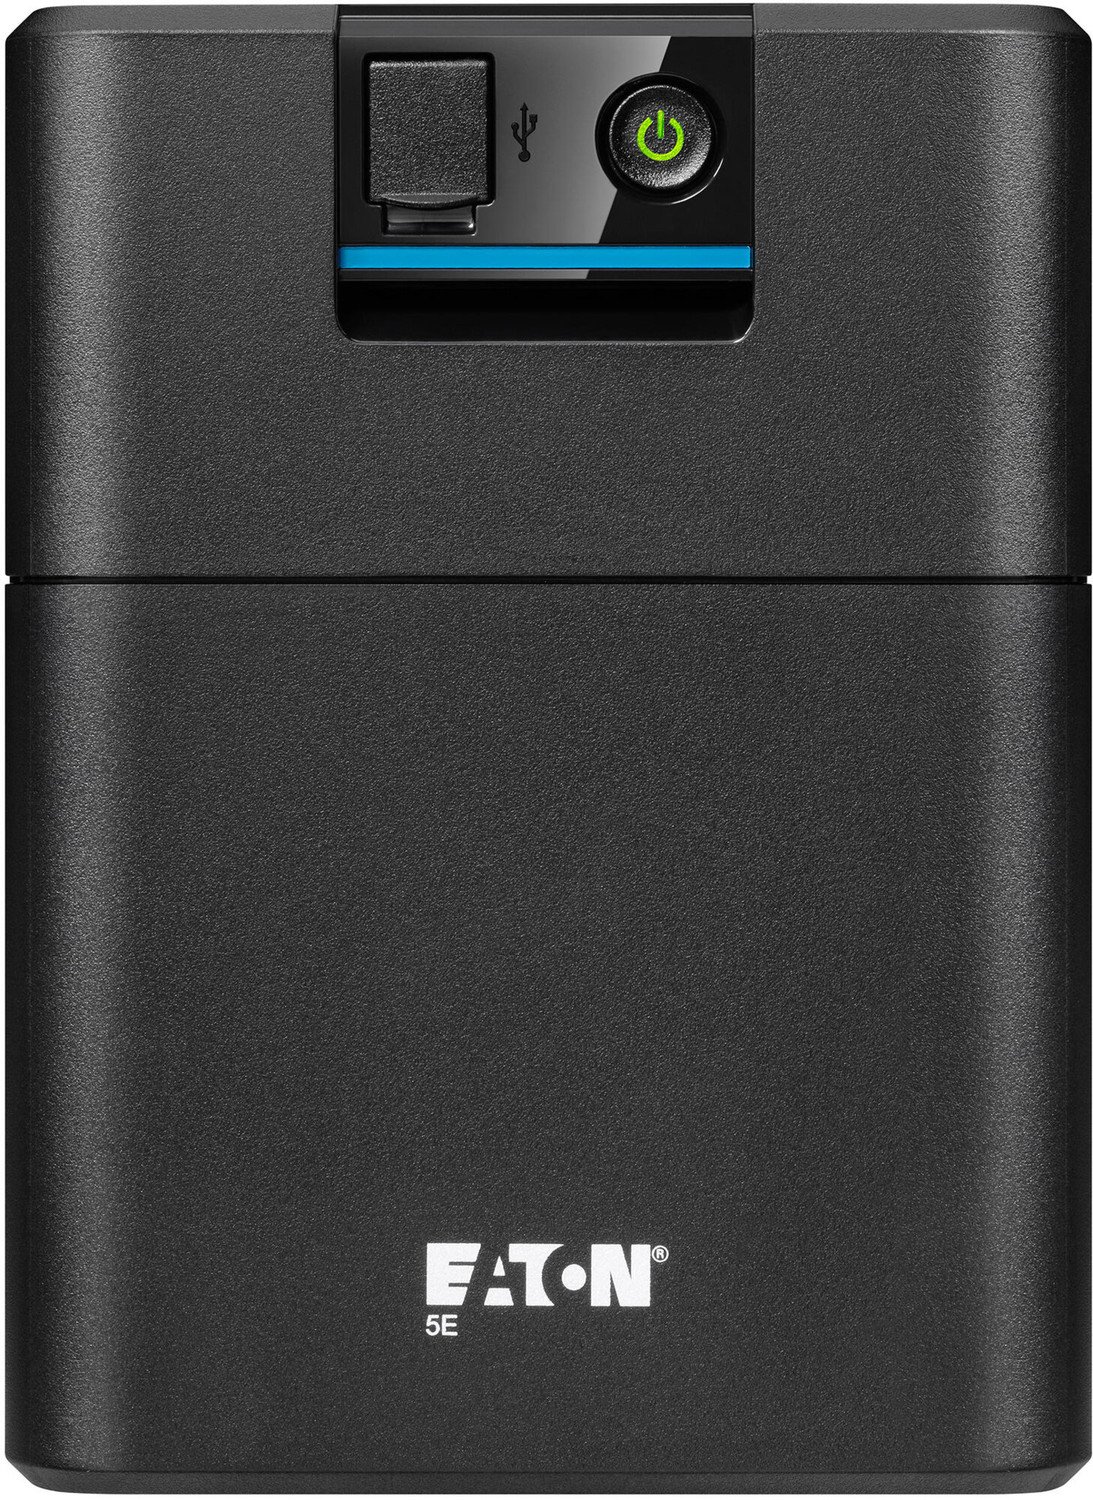 Eaton 5E 1600 USB FR G2 - 5E1600UF